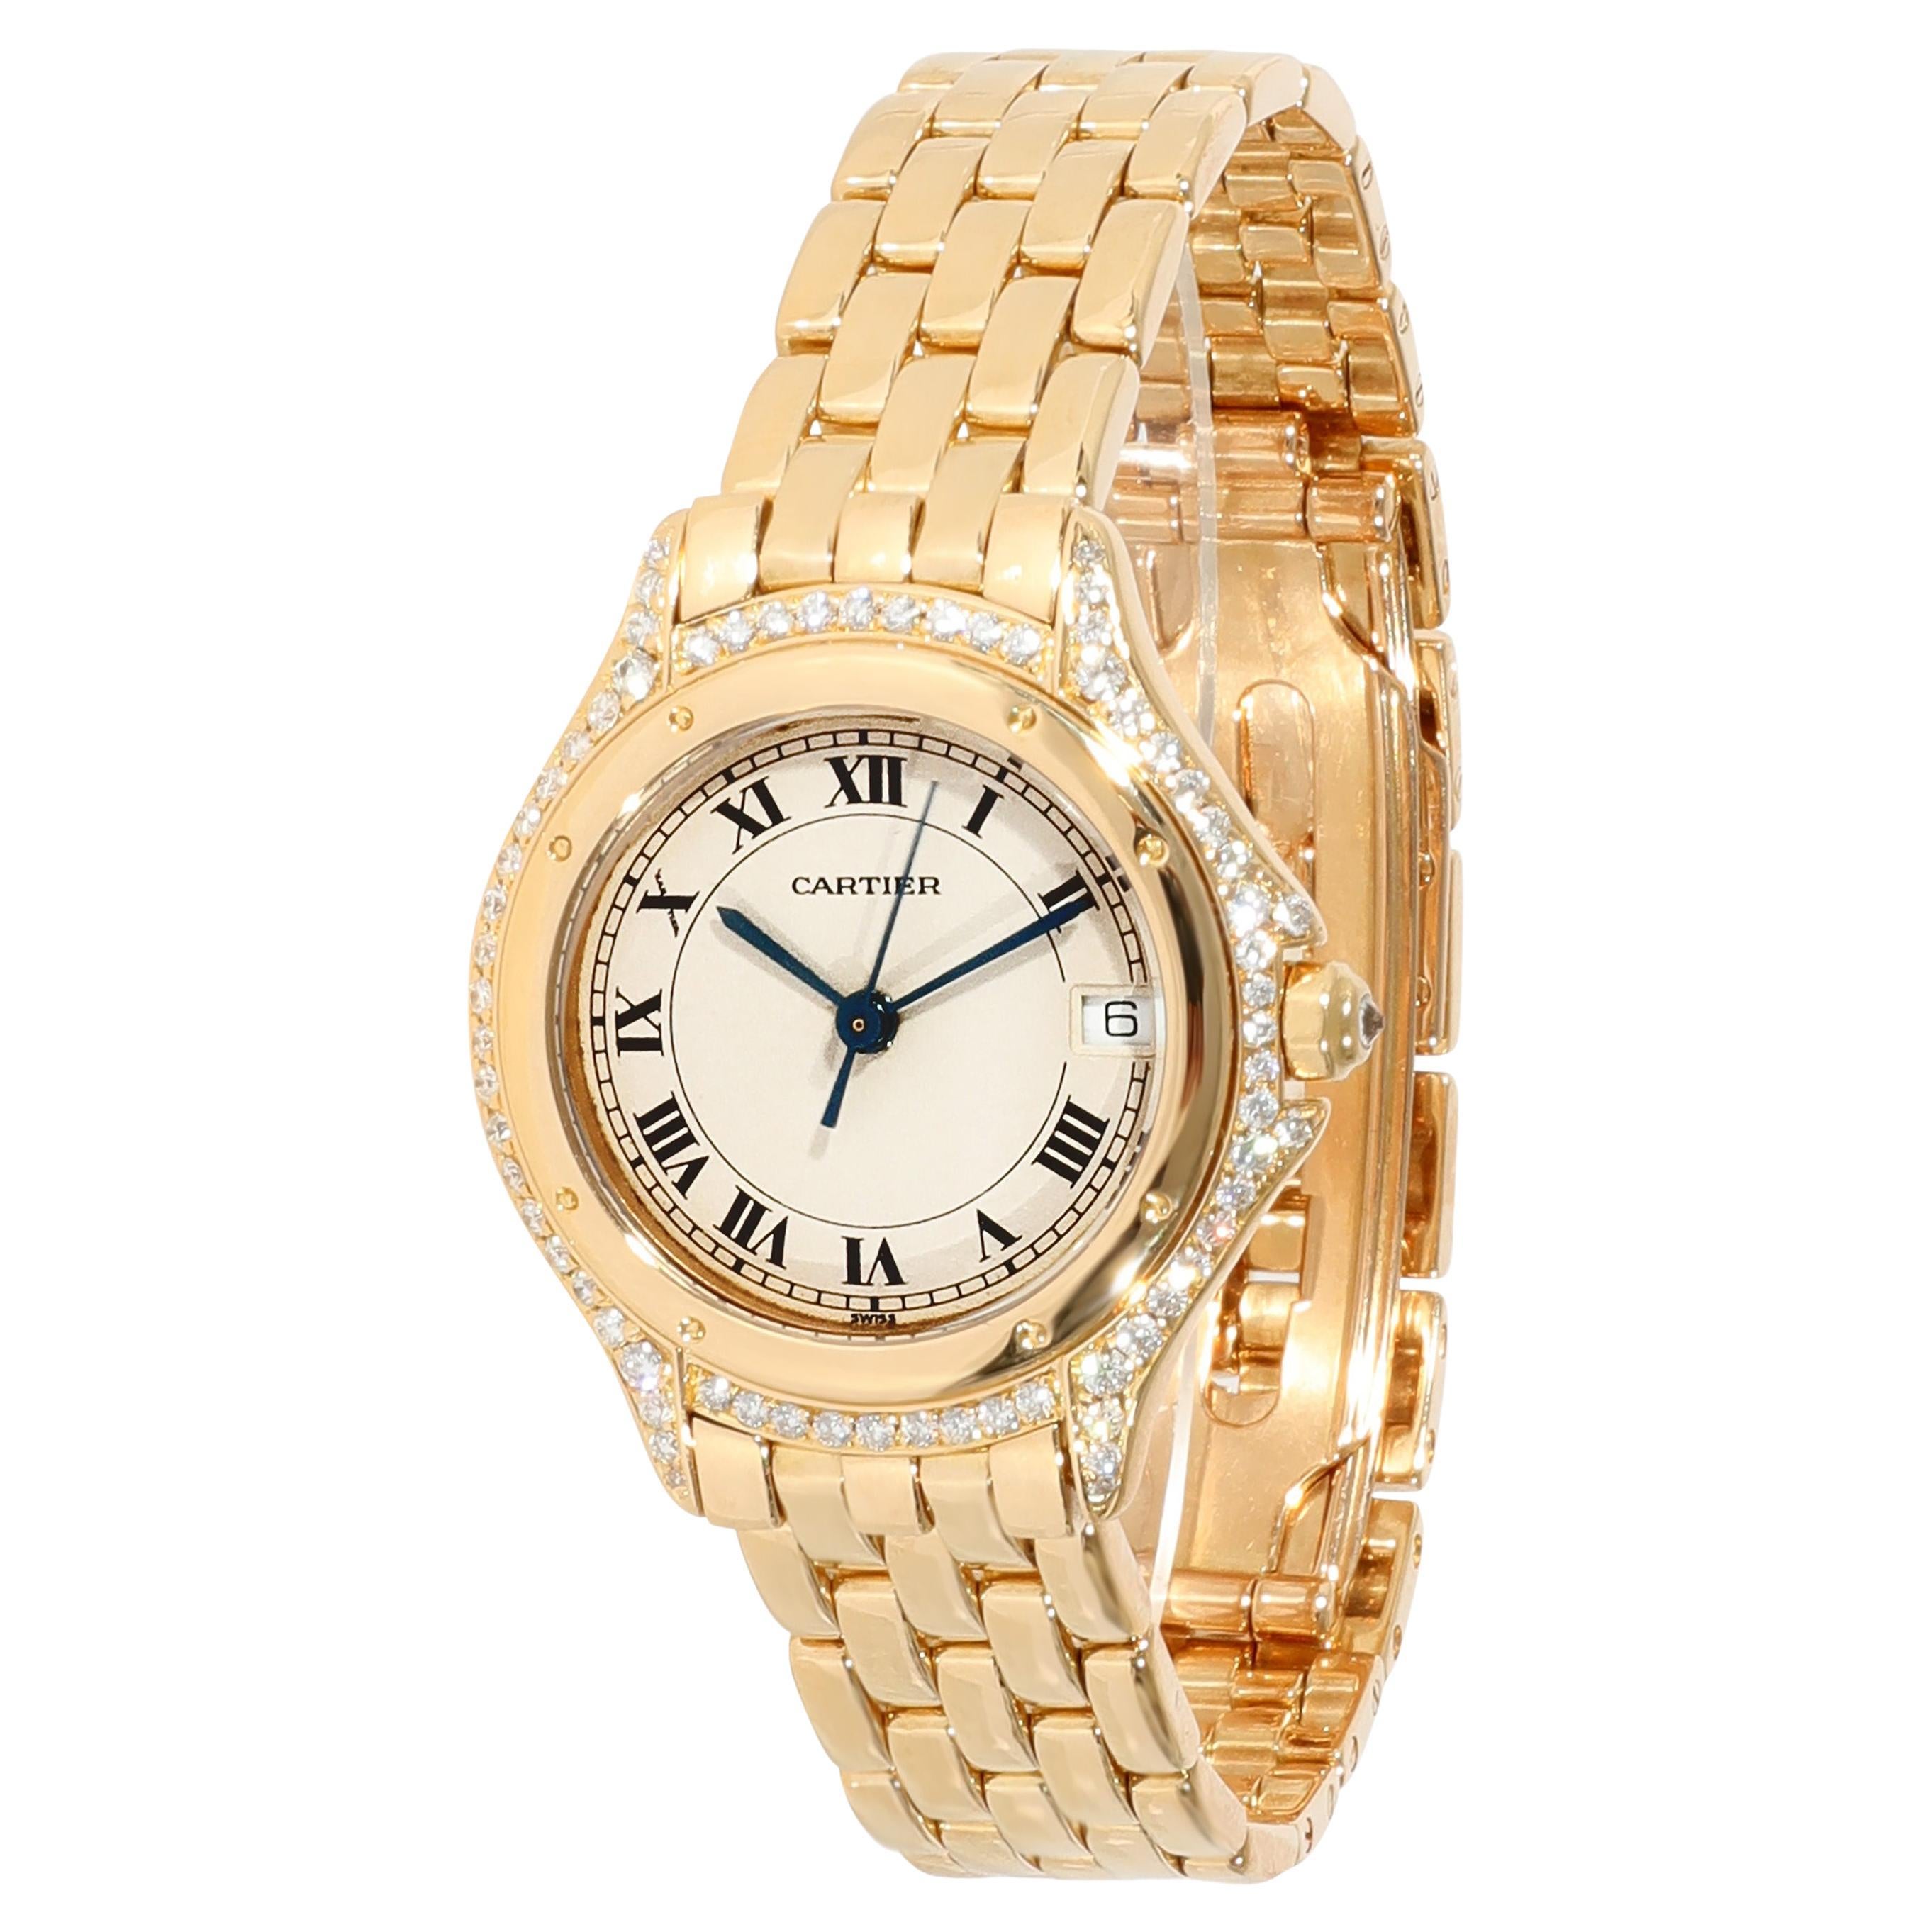 Cartier Cougar 887907 Women's Watch in 18kt Yellow Gold